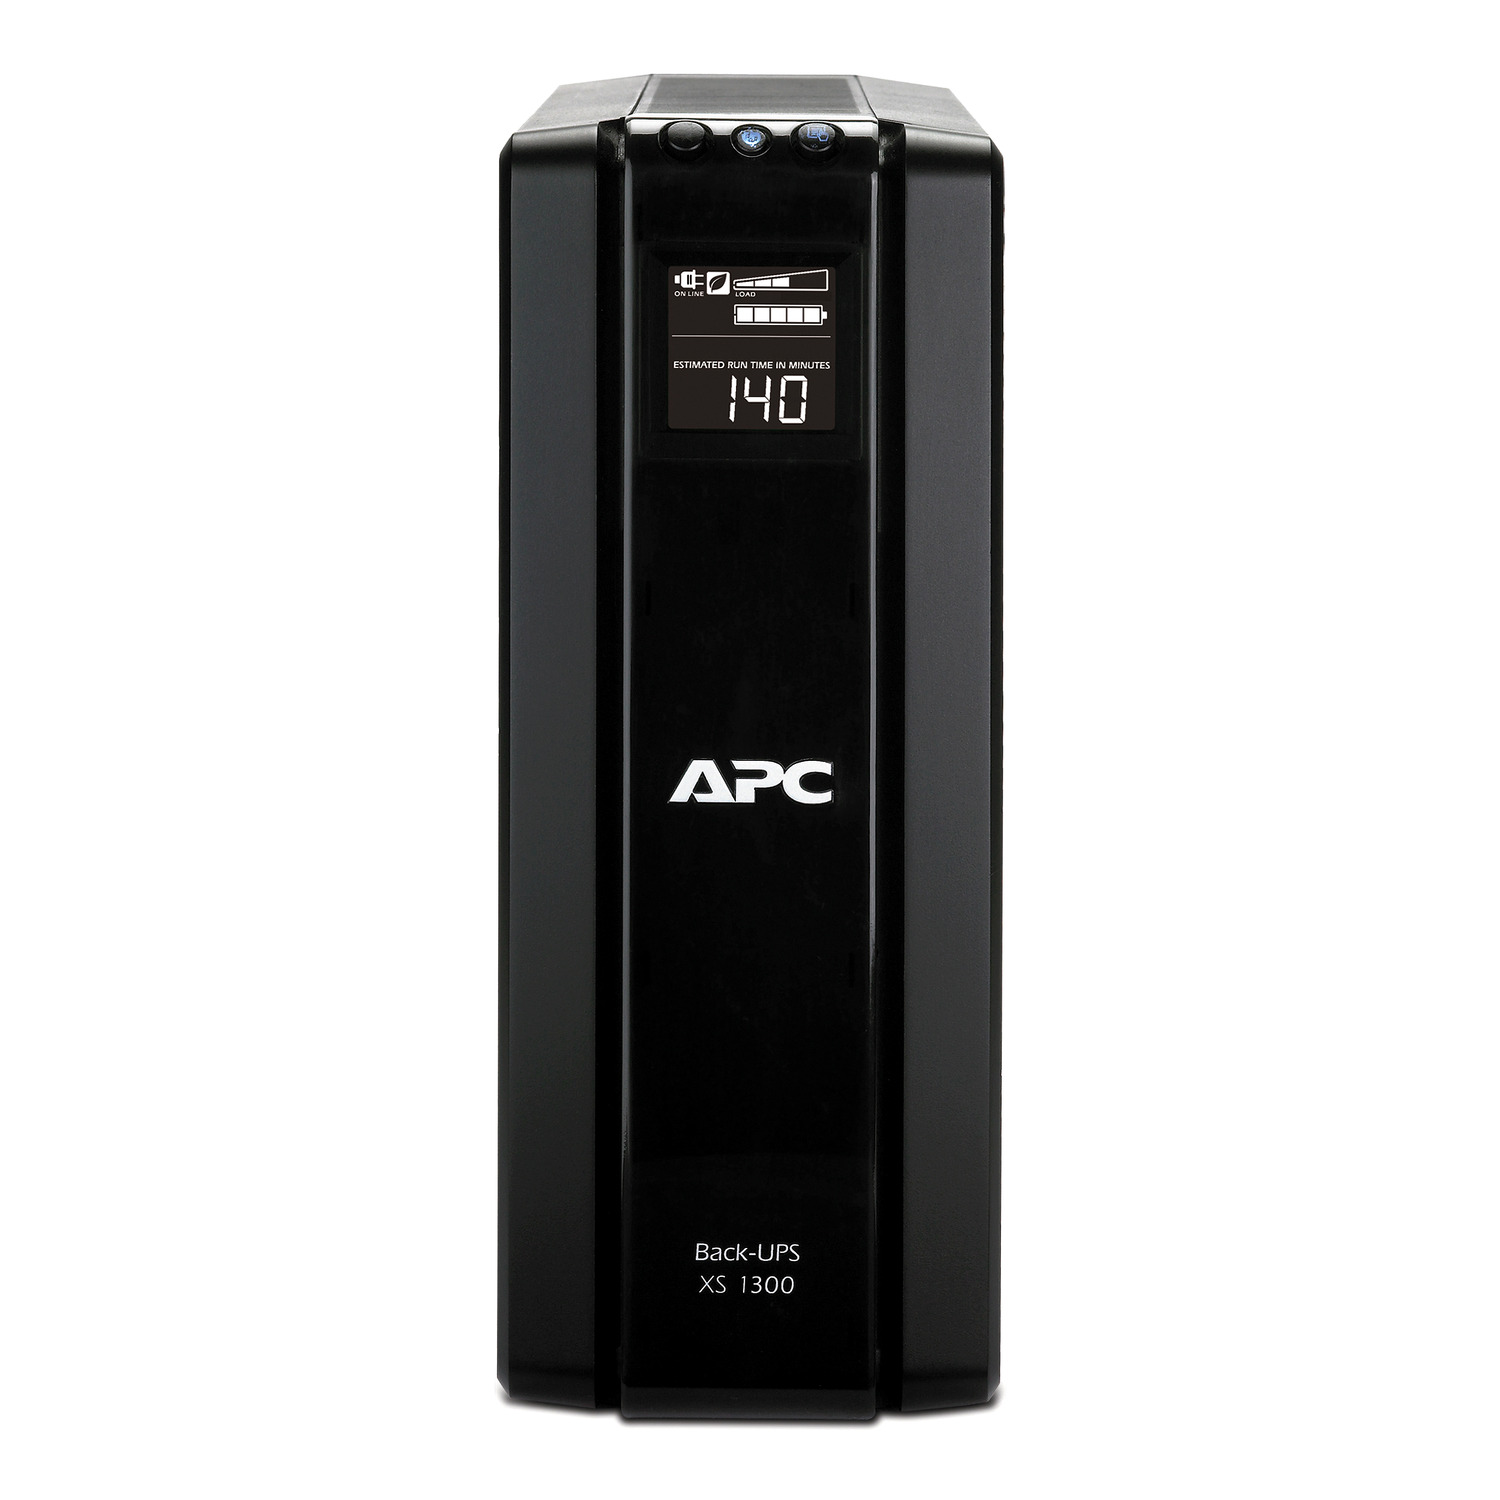 APC Power-Saving Back-UPS XS 1300VA - BX1300G | APC USA